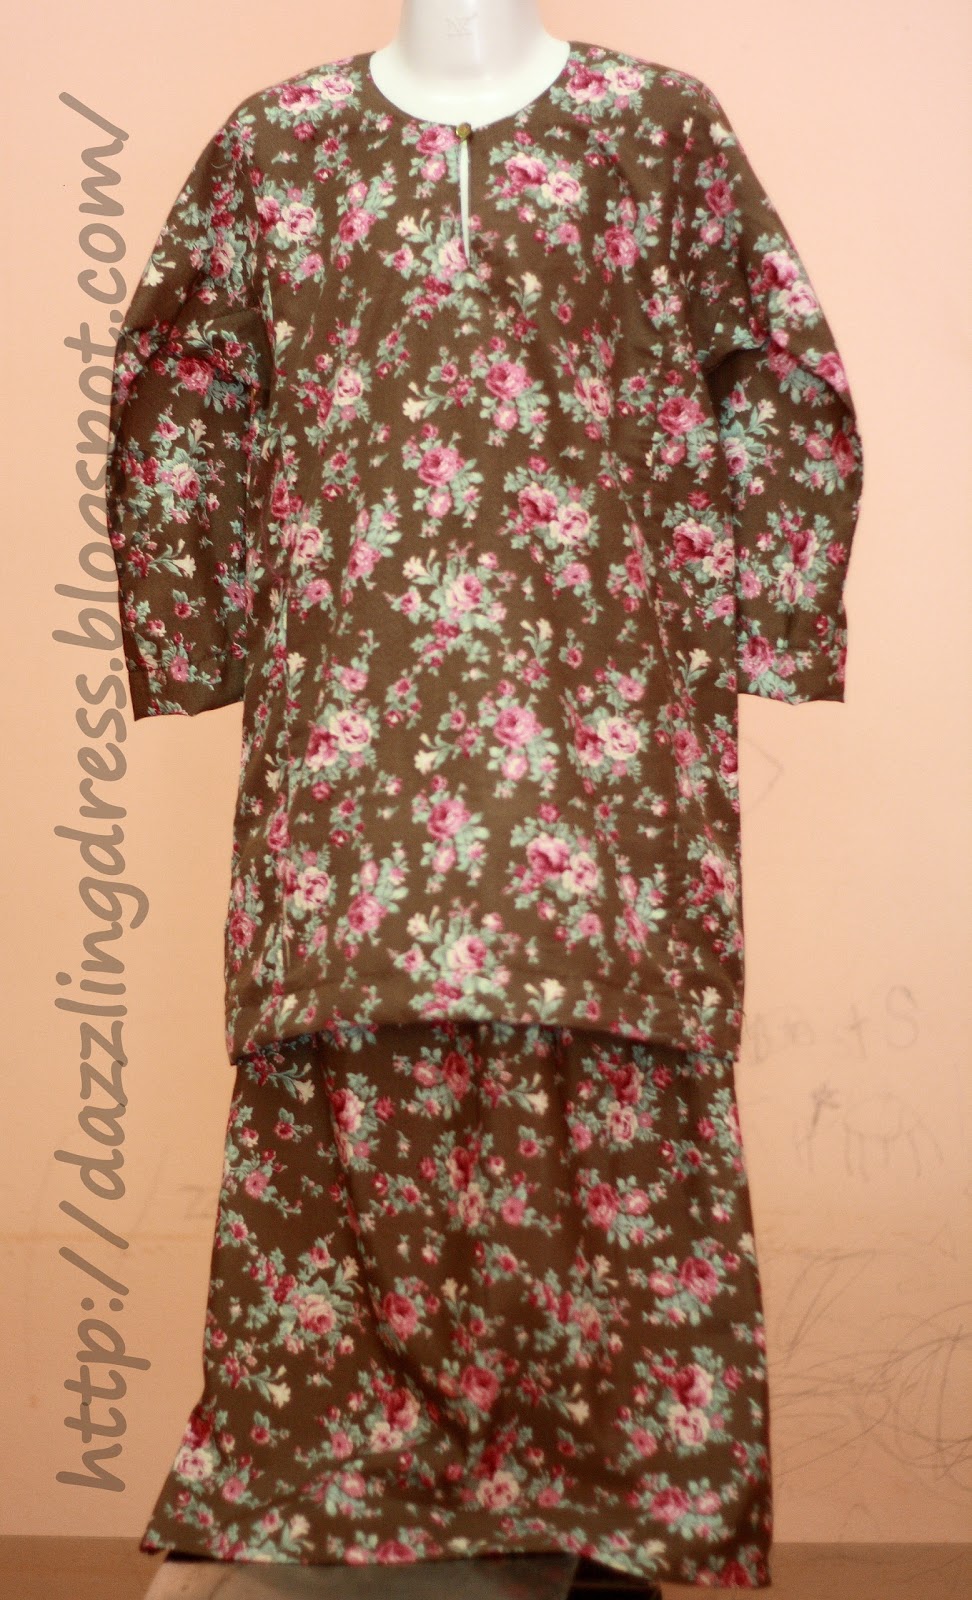  Kilang Baju Malaysia pemborong pakaian kilang jahit baju 